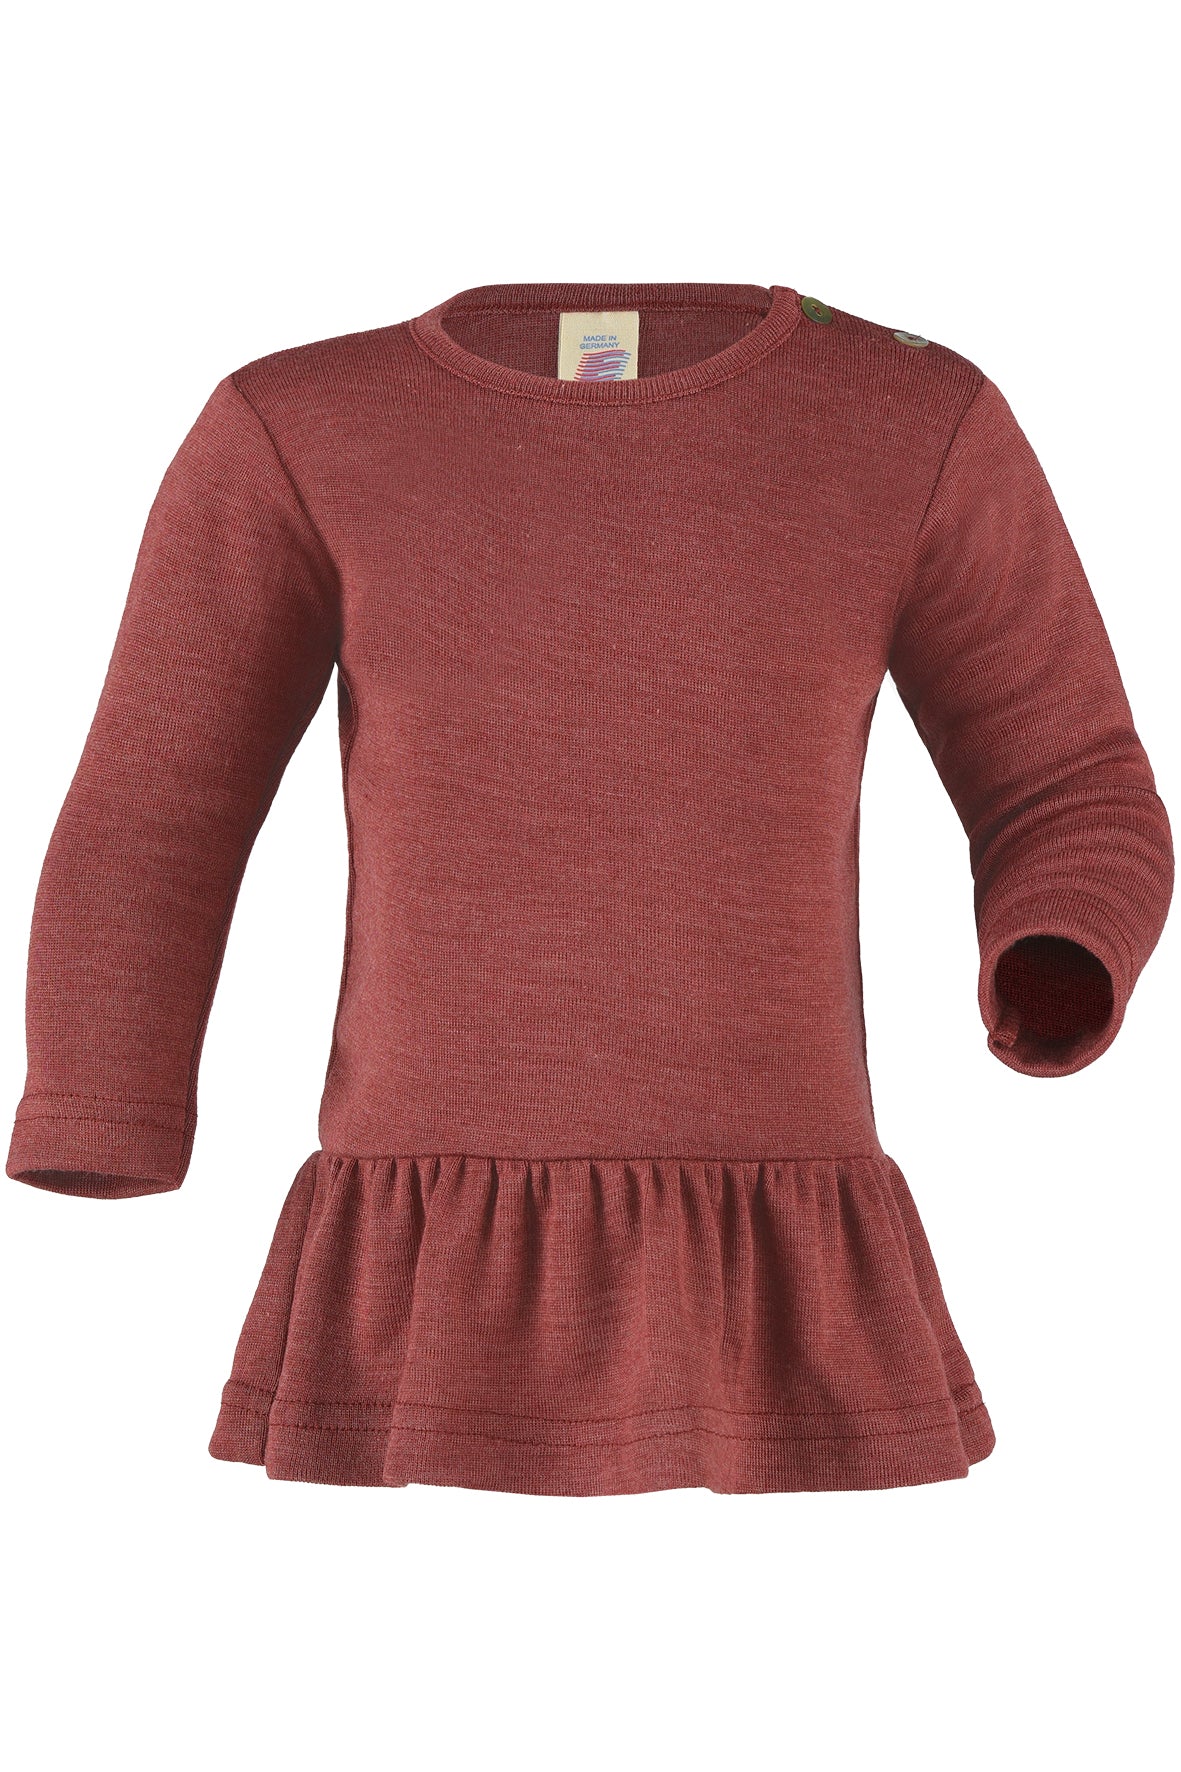 Engel Child Long Sleeve Shirt - Merino Wool/Silk – Warmth and Weather